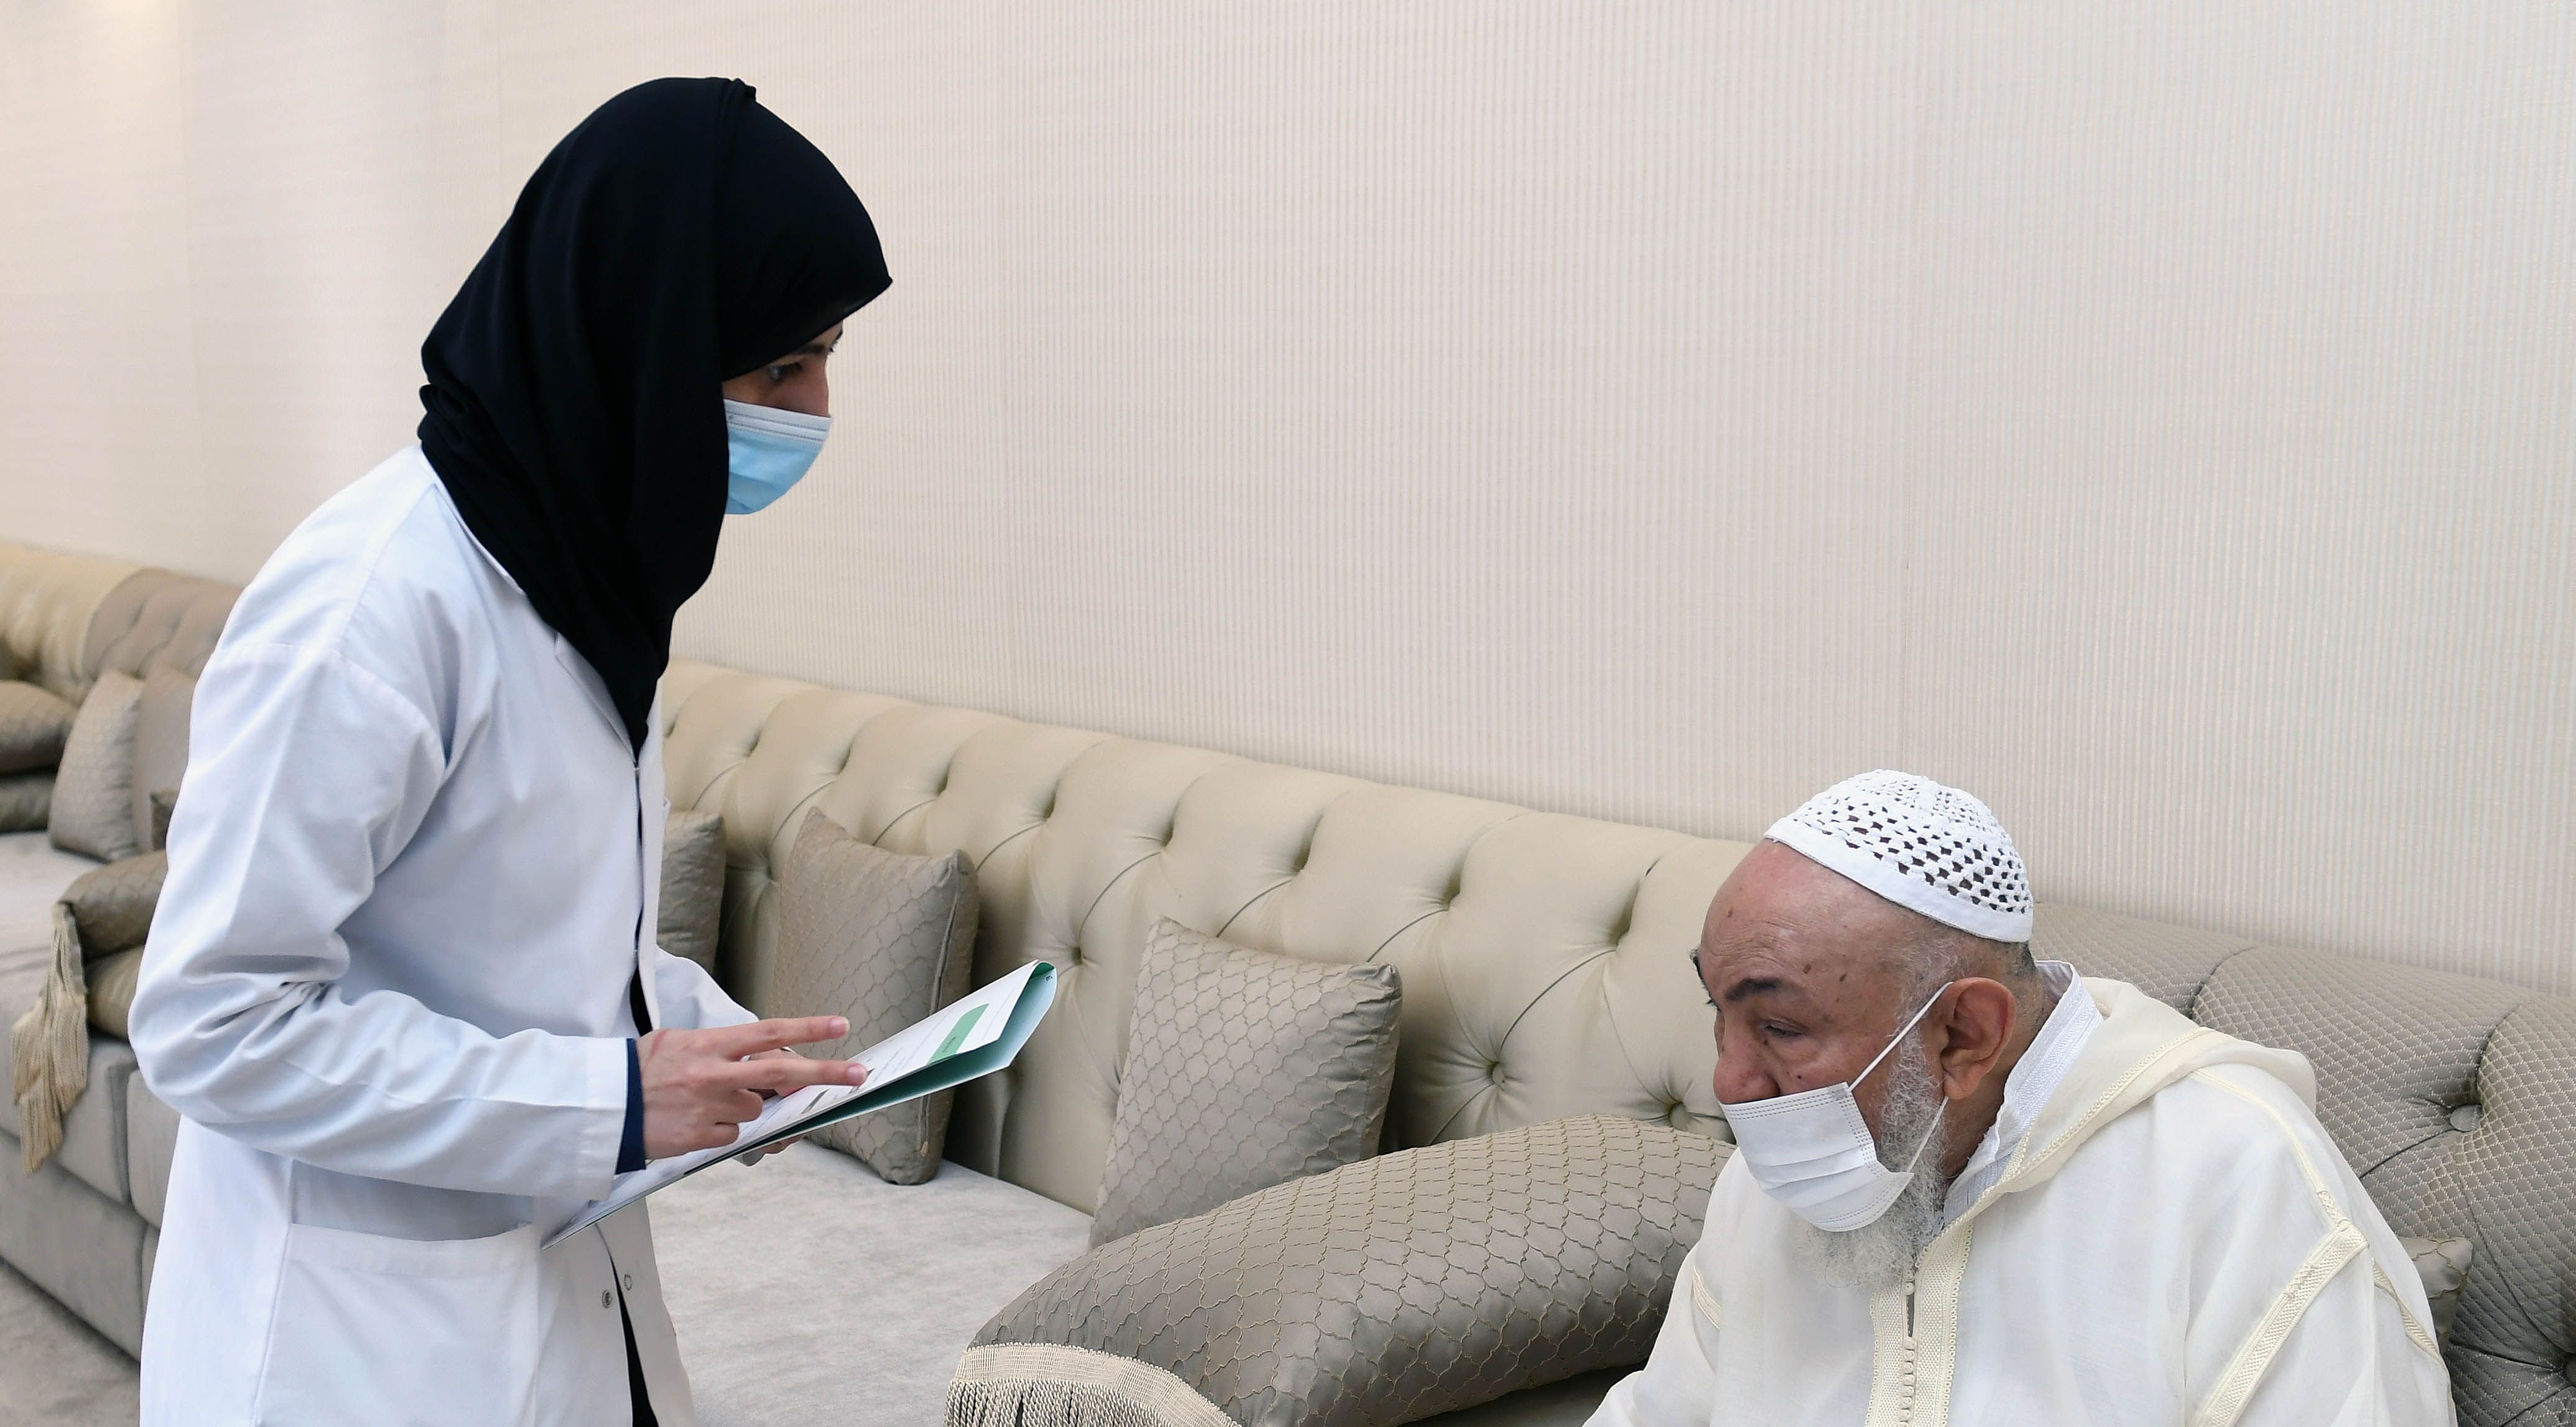 UAE Fatwa Council Chairman receives COVID-19 vaccine